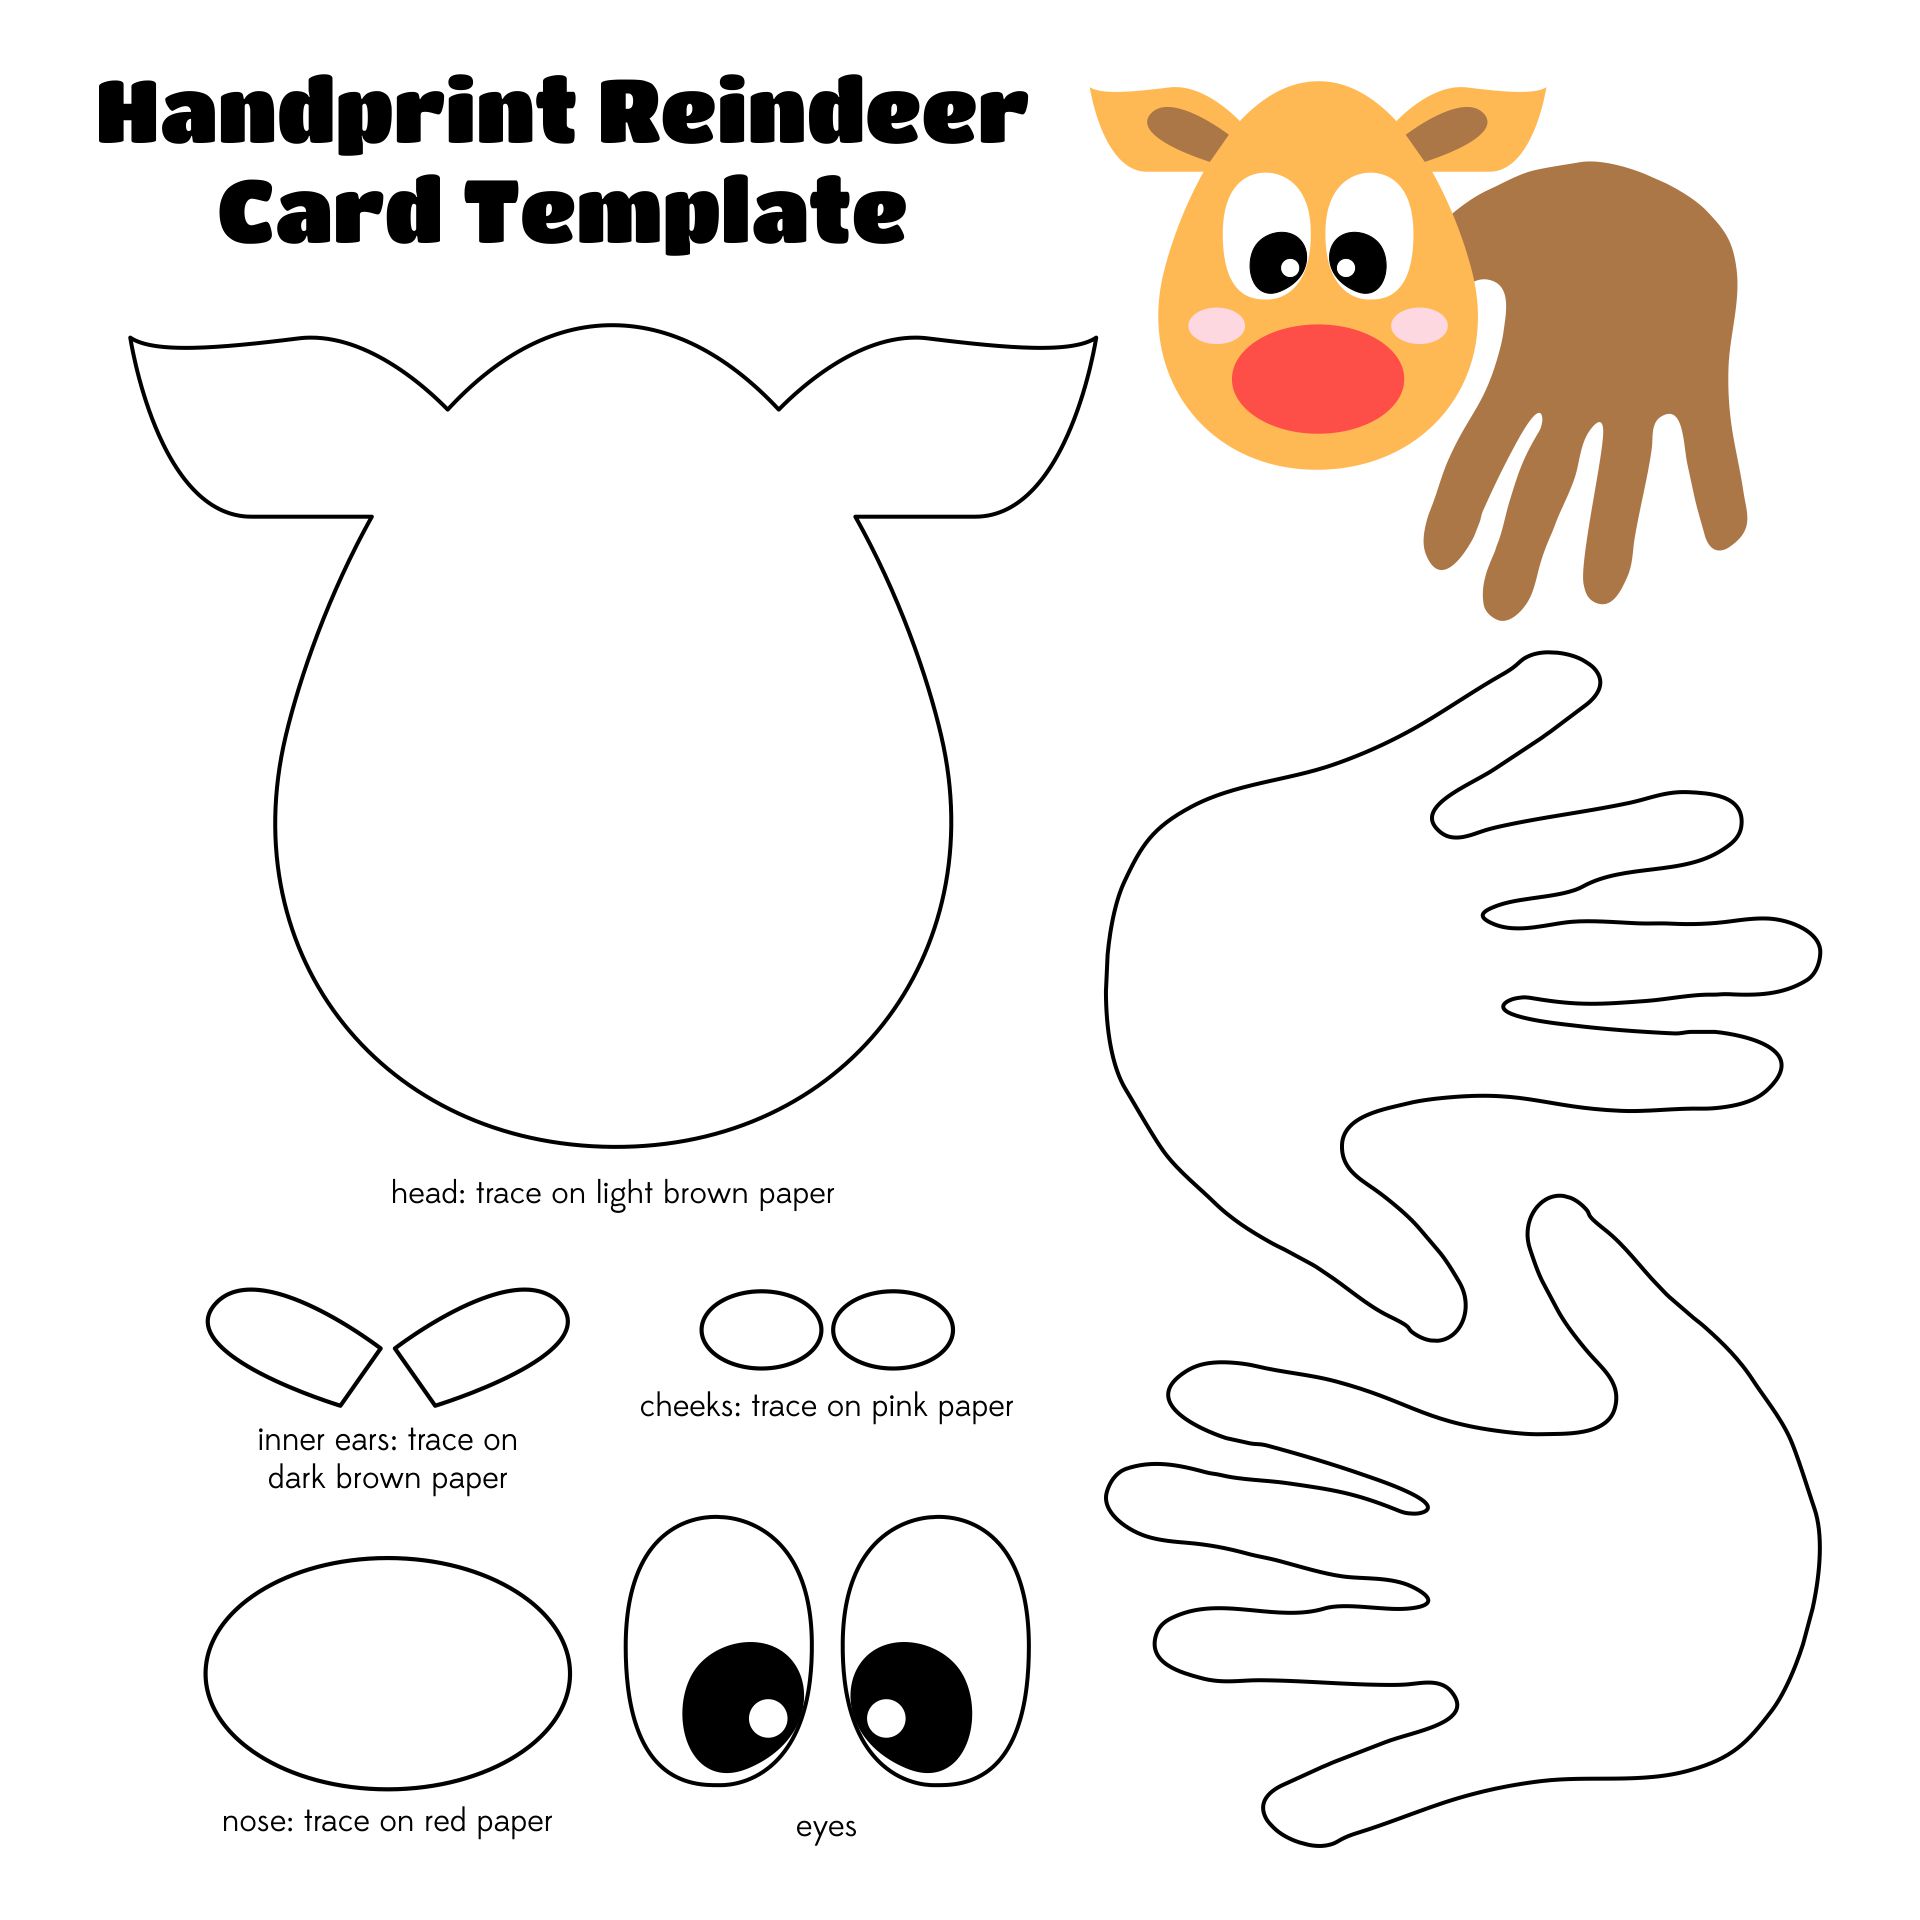 Handprint Reindeer Card For Christmas Printable Template